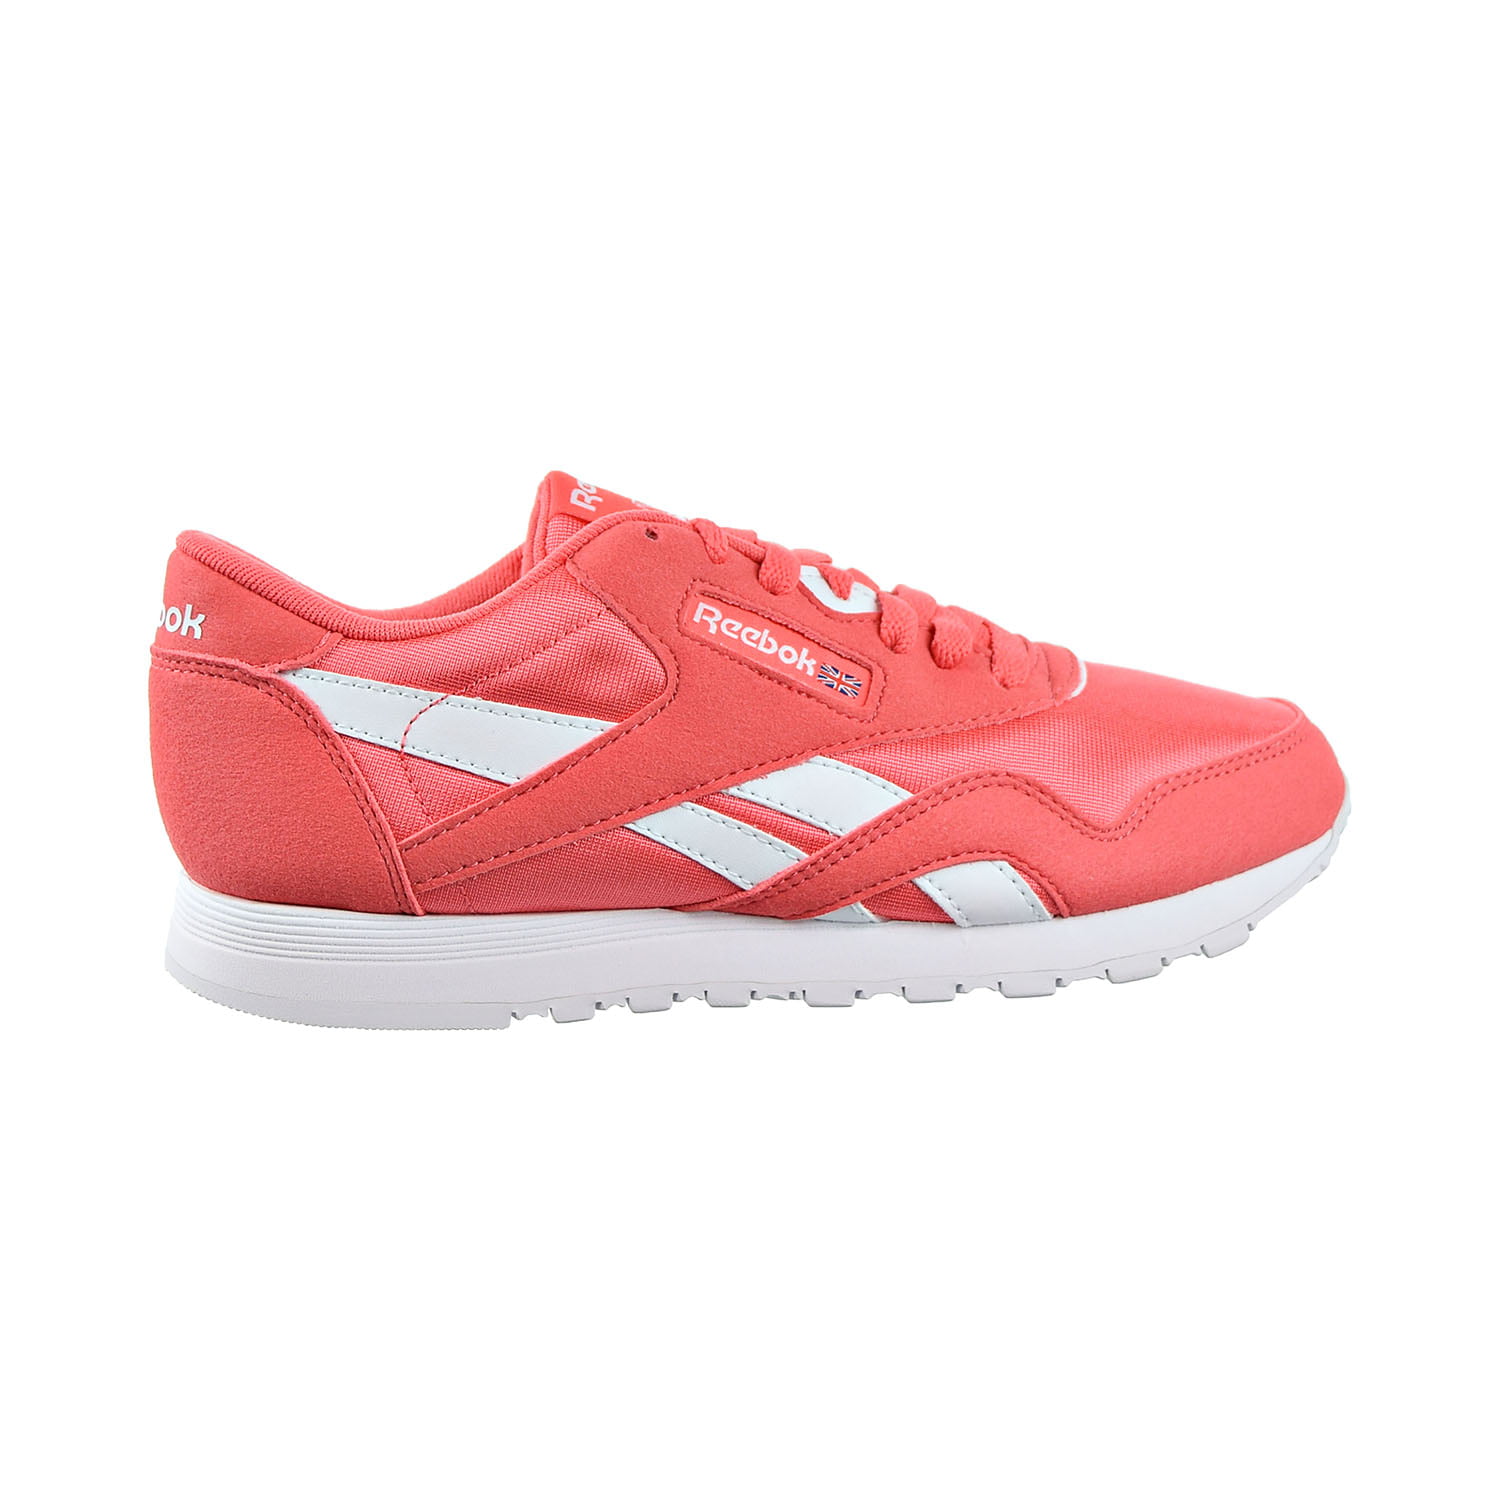 Running Shoes Bright Rose/White dv7698 